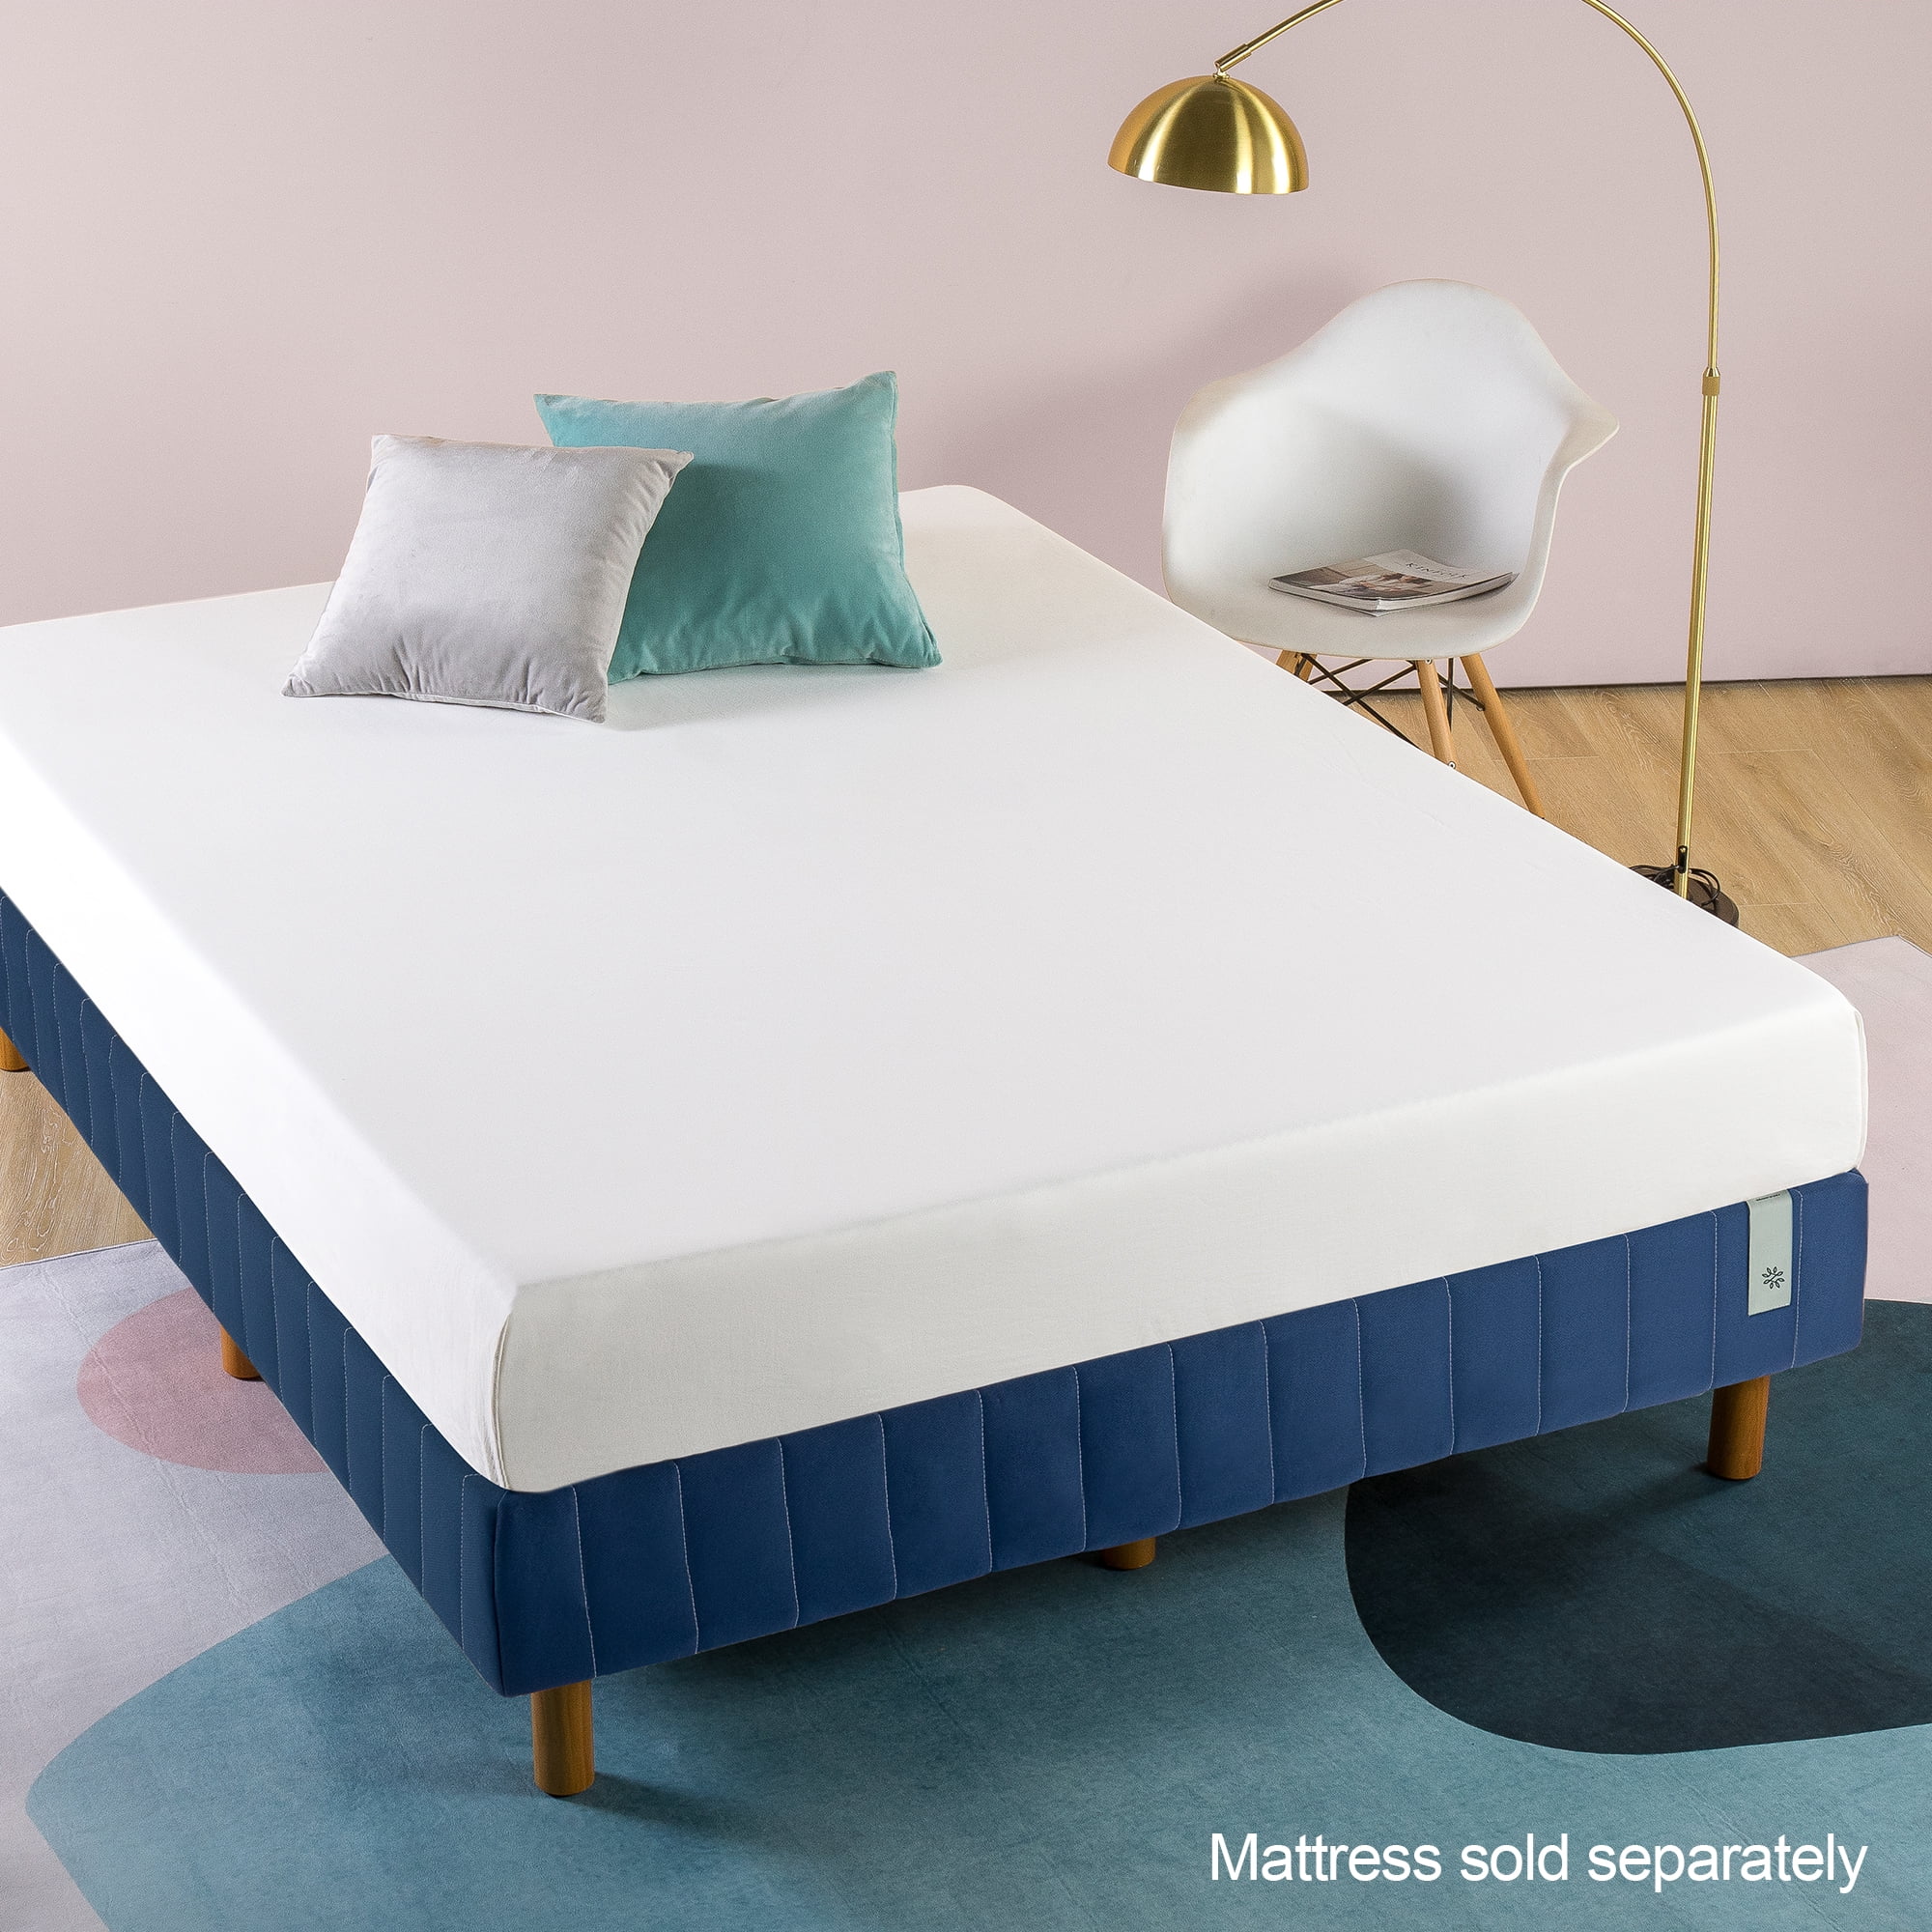 Zinus Good Design Winner Justina, Does Box Spring Make Bed More Comfortable